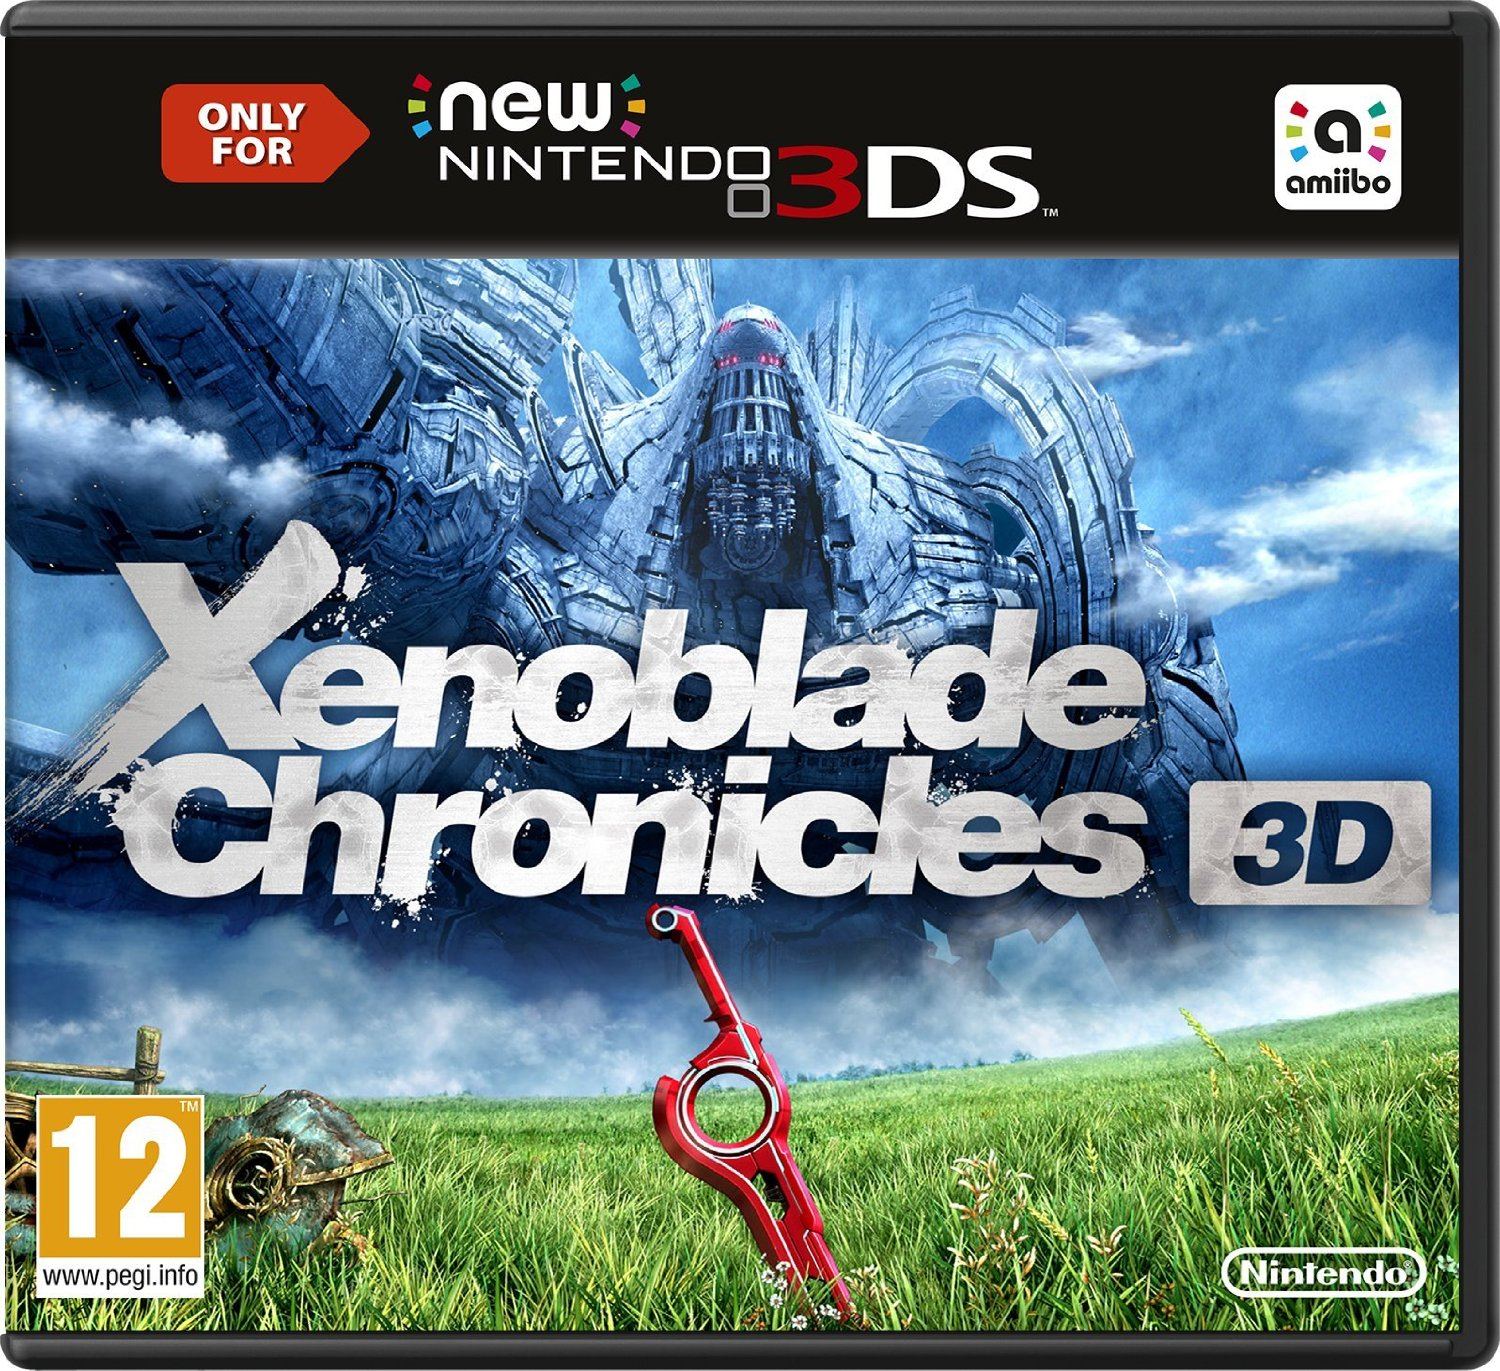 Xenoblade Chronicles 3D - Trailer de lançamento (New Nintendo 3DS) 